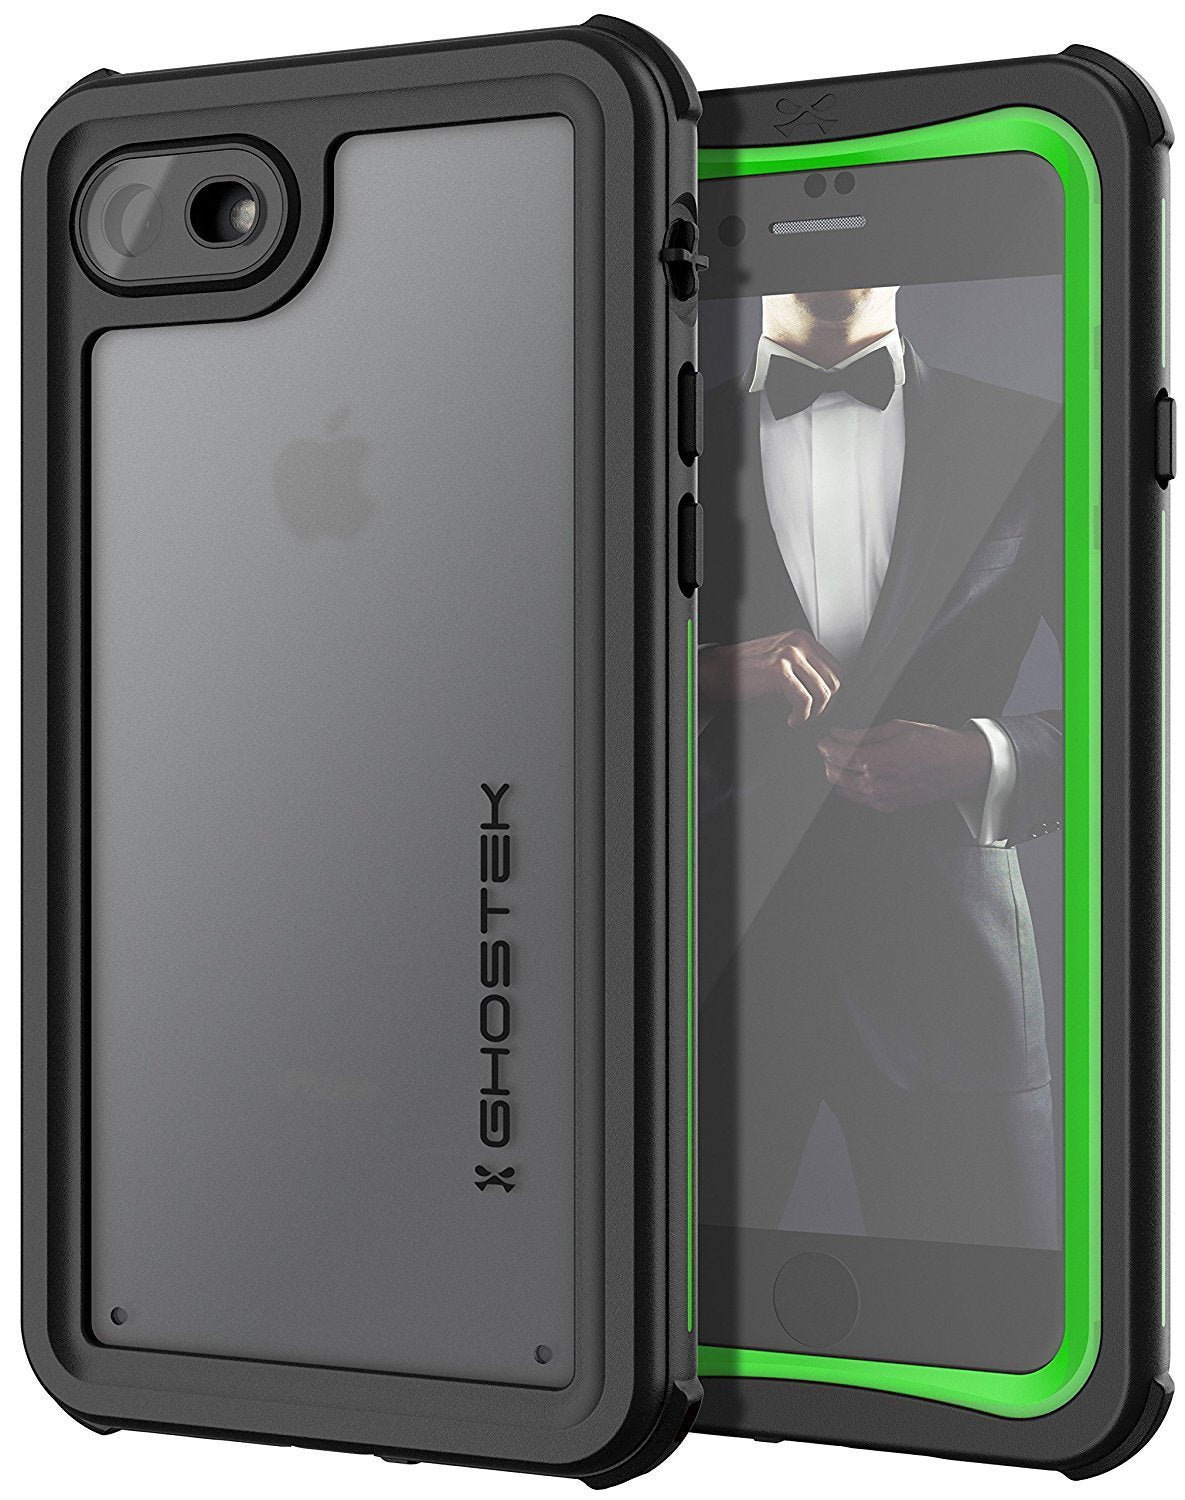 iPhone  7  Waterproof Case, Ghostek Nautical Series for iPhone  7  | Slim Underwater Protection| Adventure Duty | Ultra Fit | Swimming (Green)